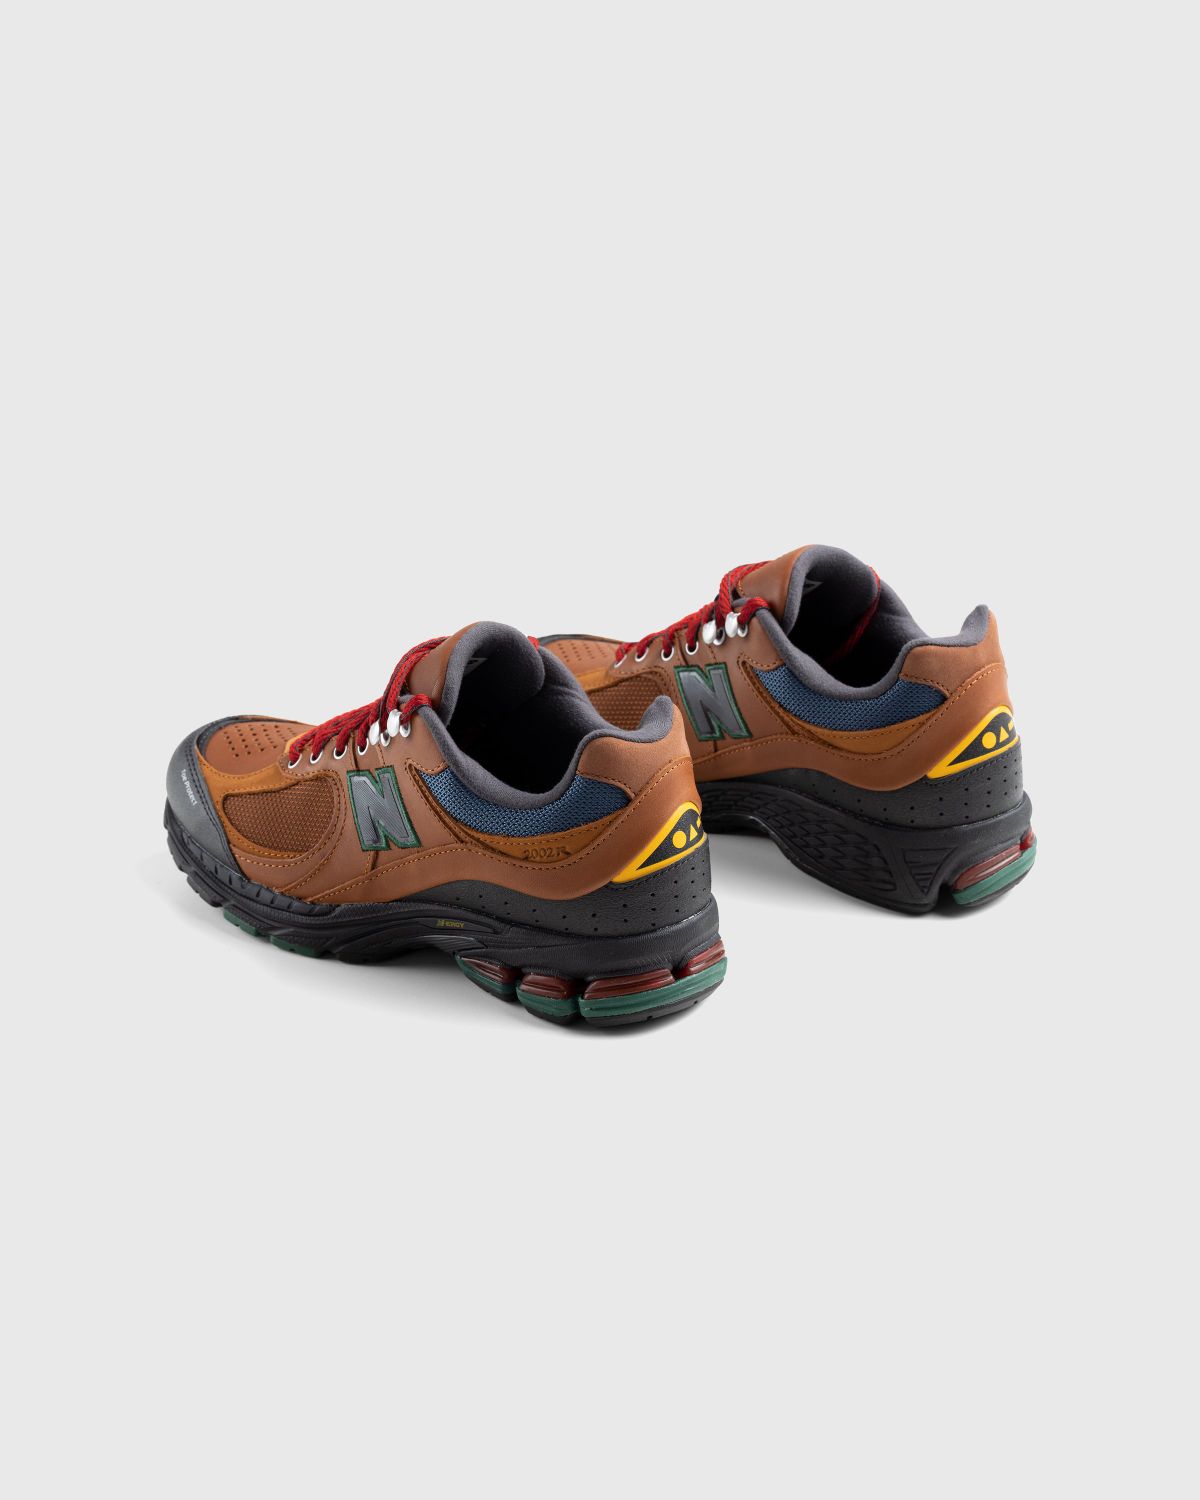 New Balance – M2002RWM Brown/Team Red - Sneakers - Brown - Image 4